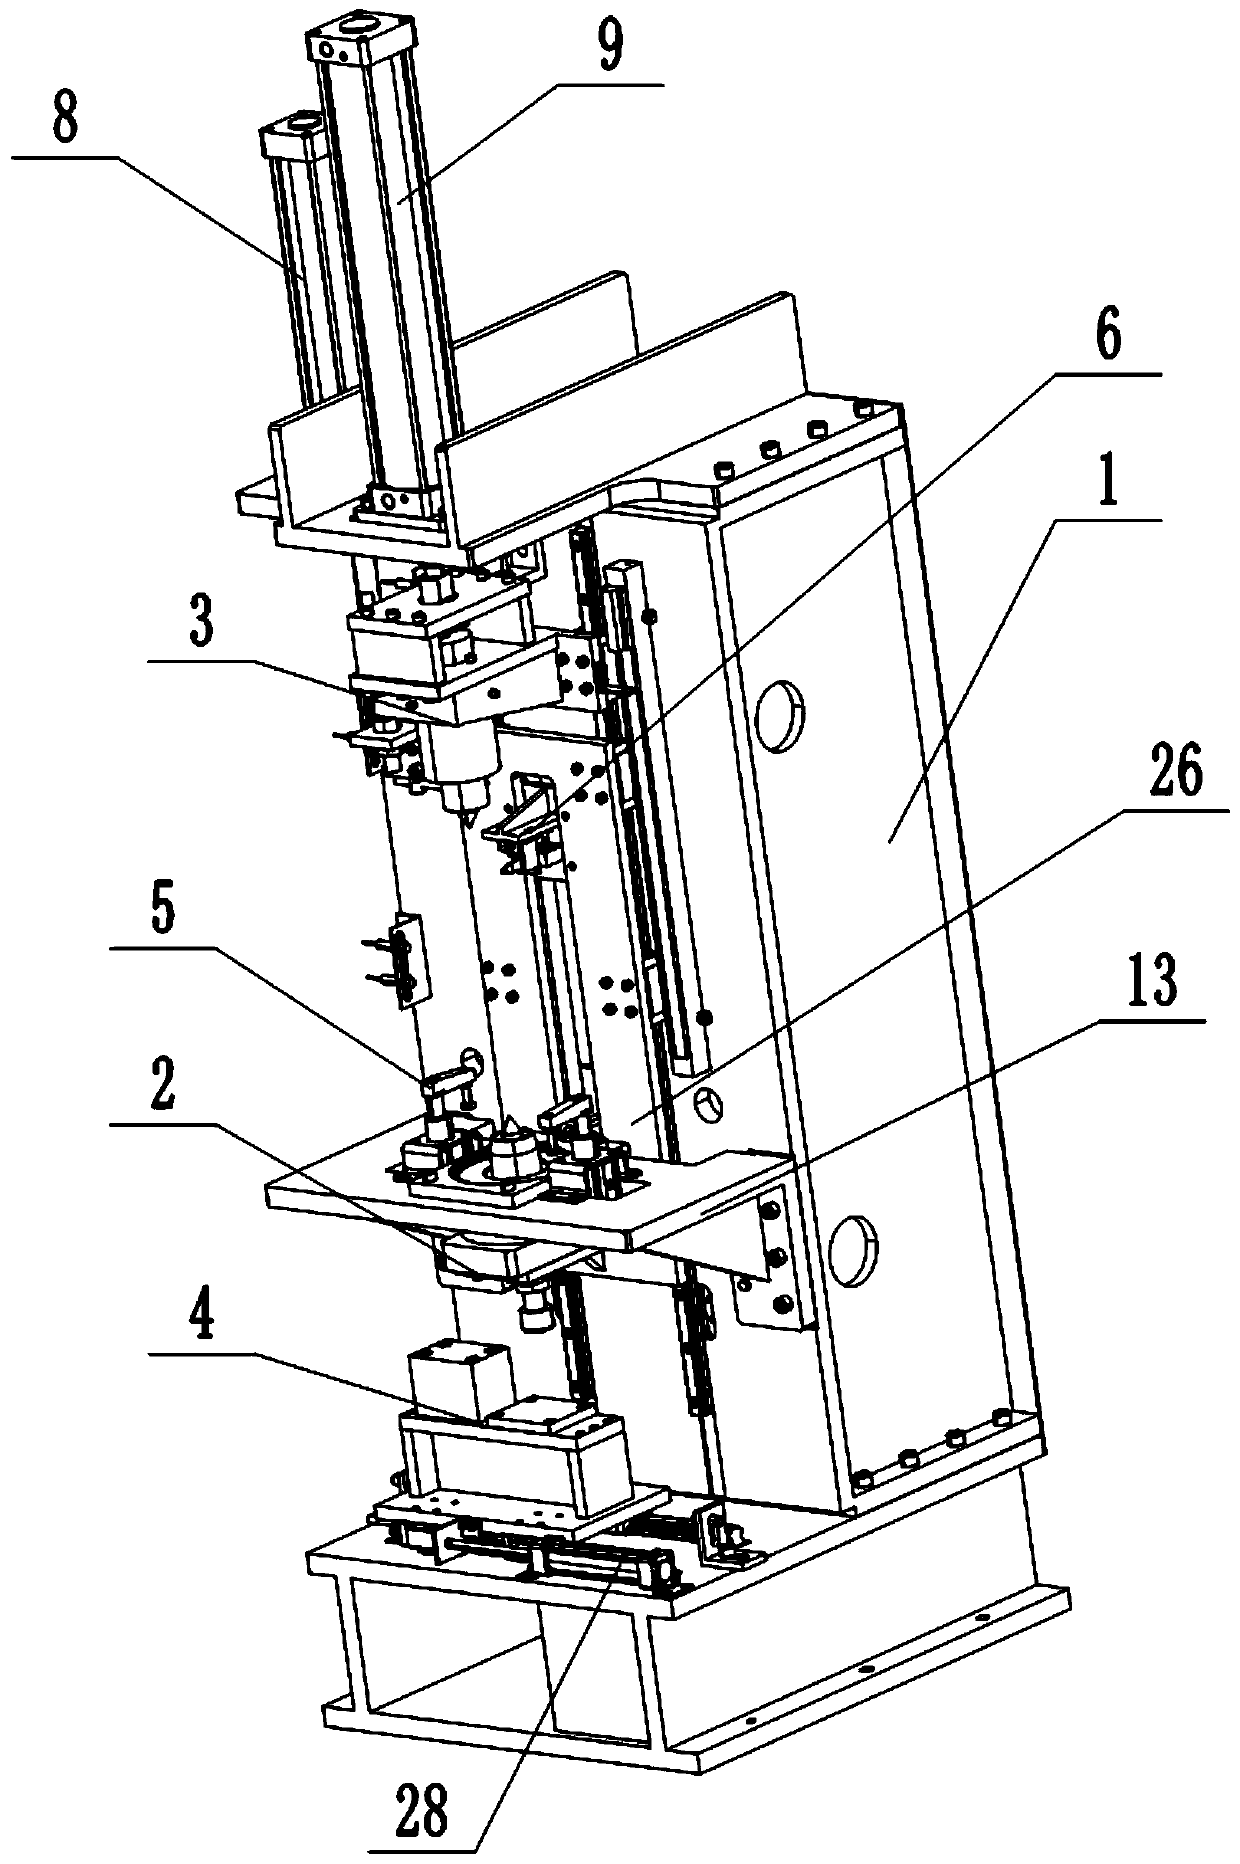 Automatic assembling equipment for gear shaft